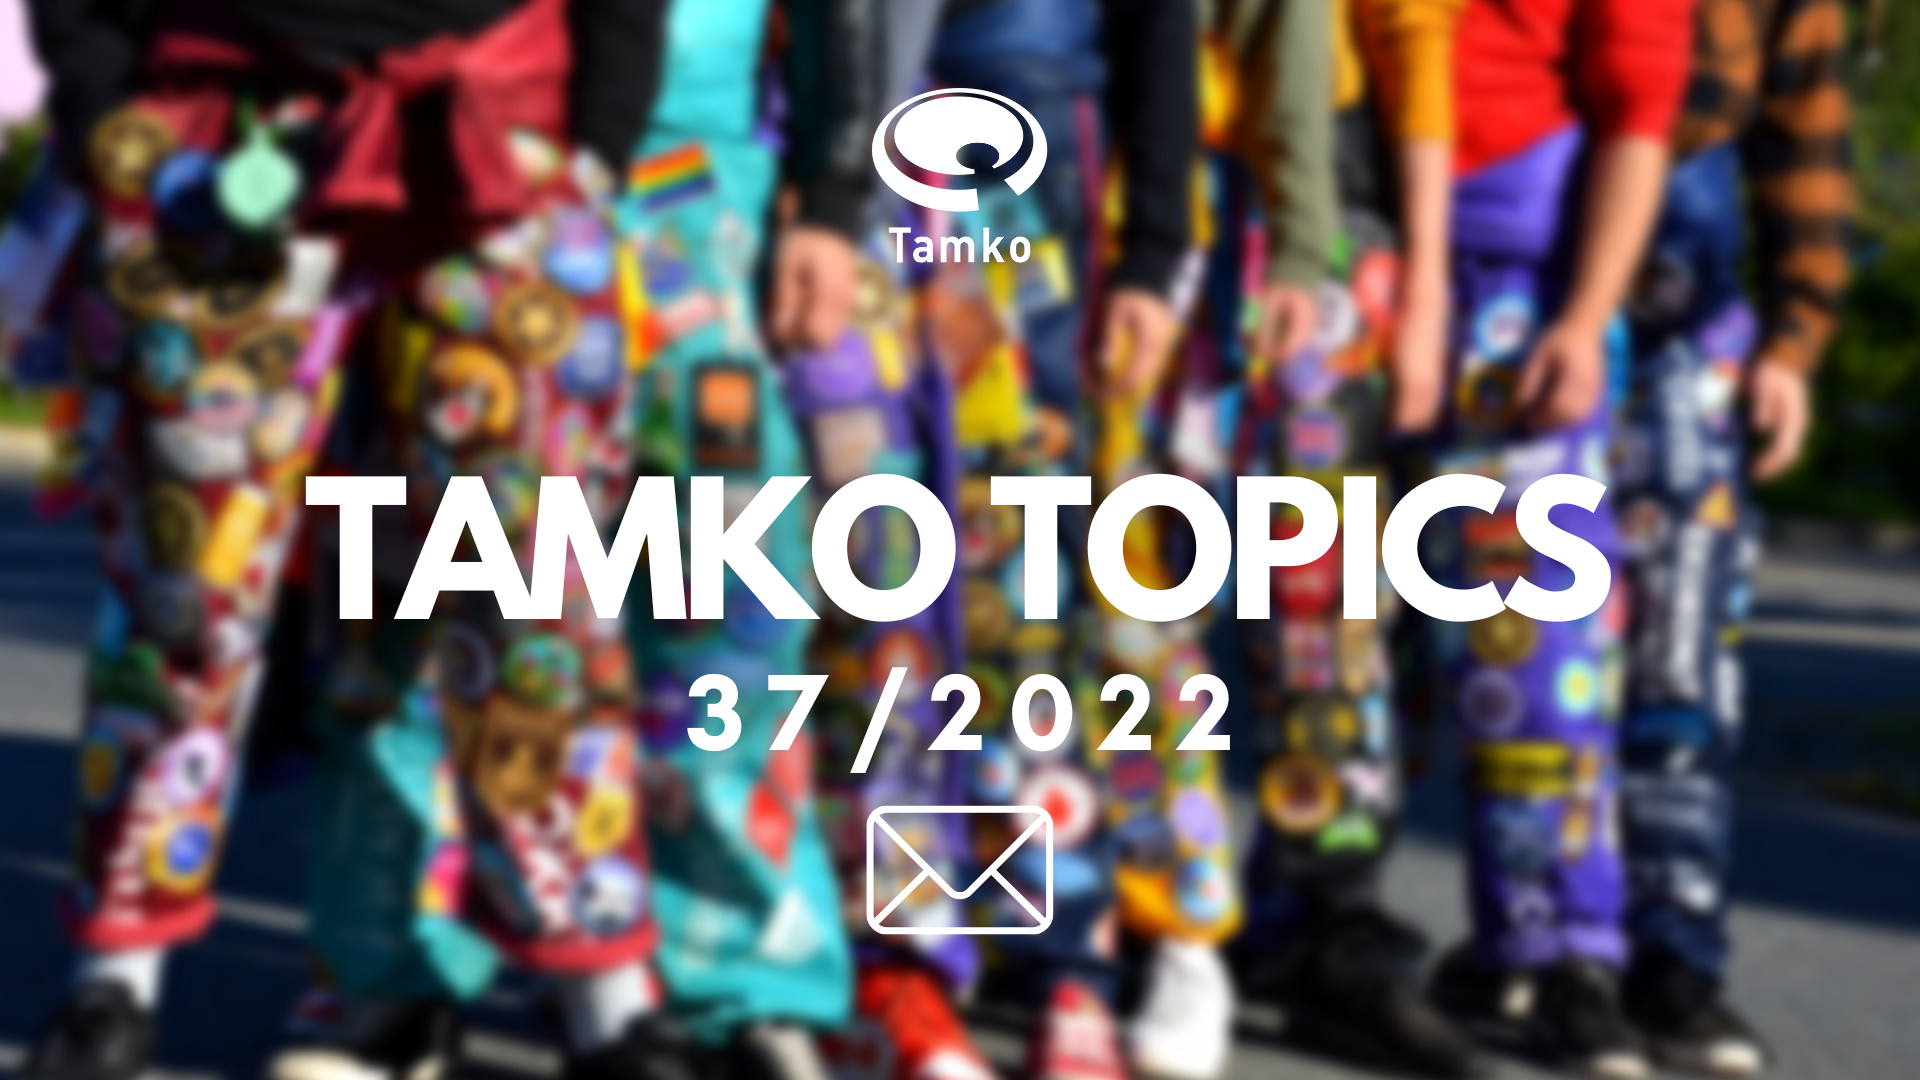 TAMKO TOPICS 37/2022